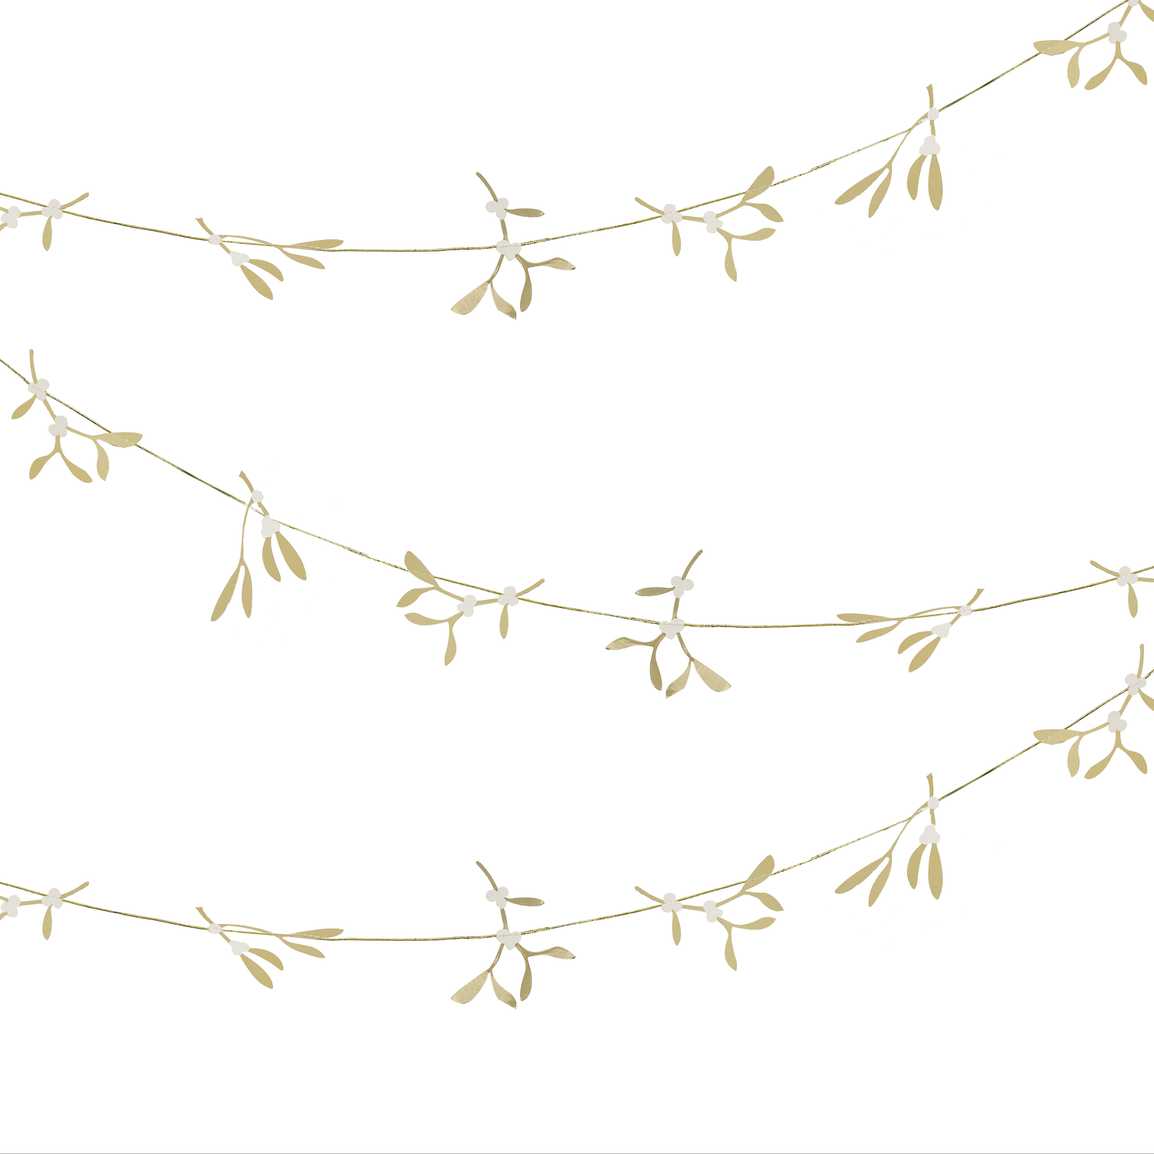 Gold Christmas Mistletoe Garland